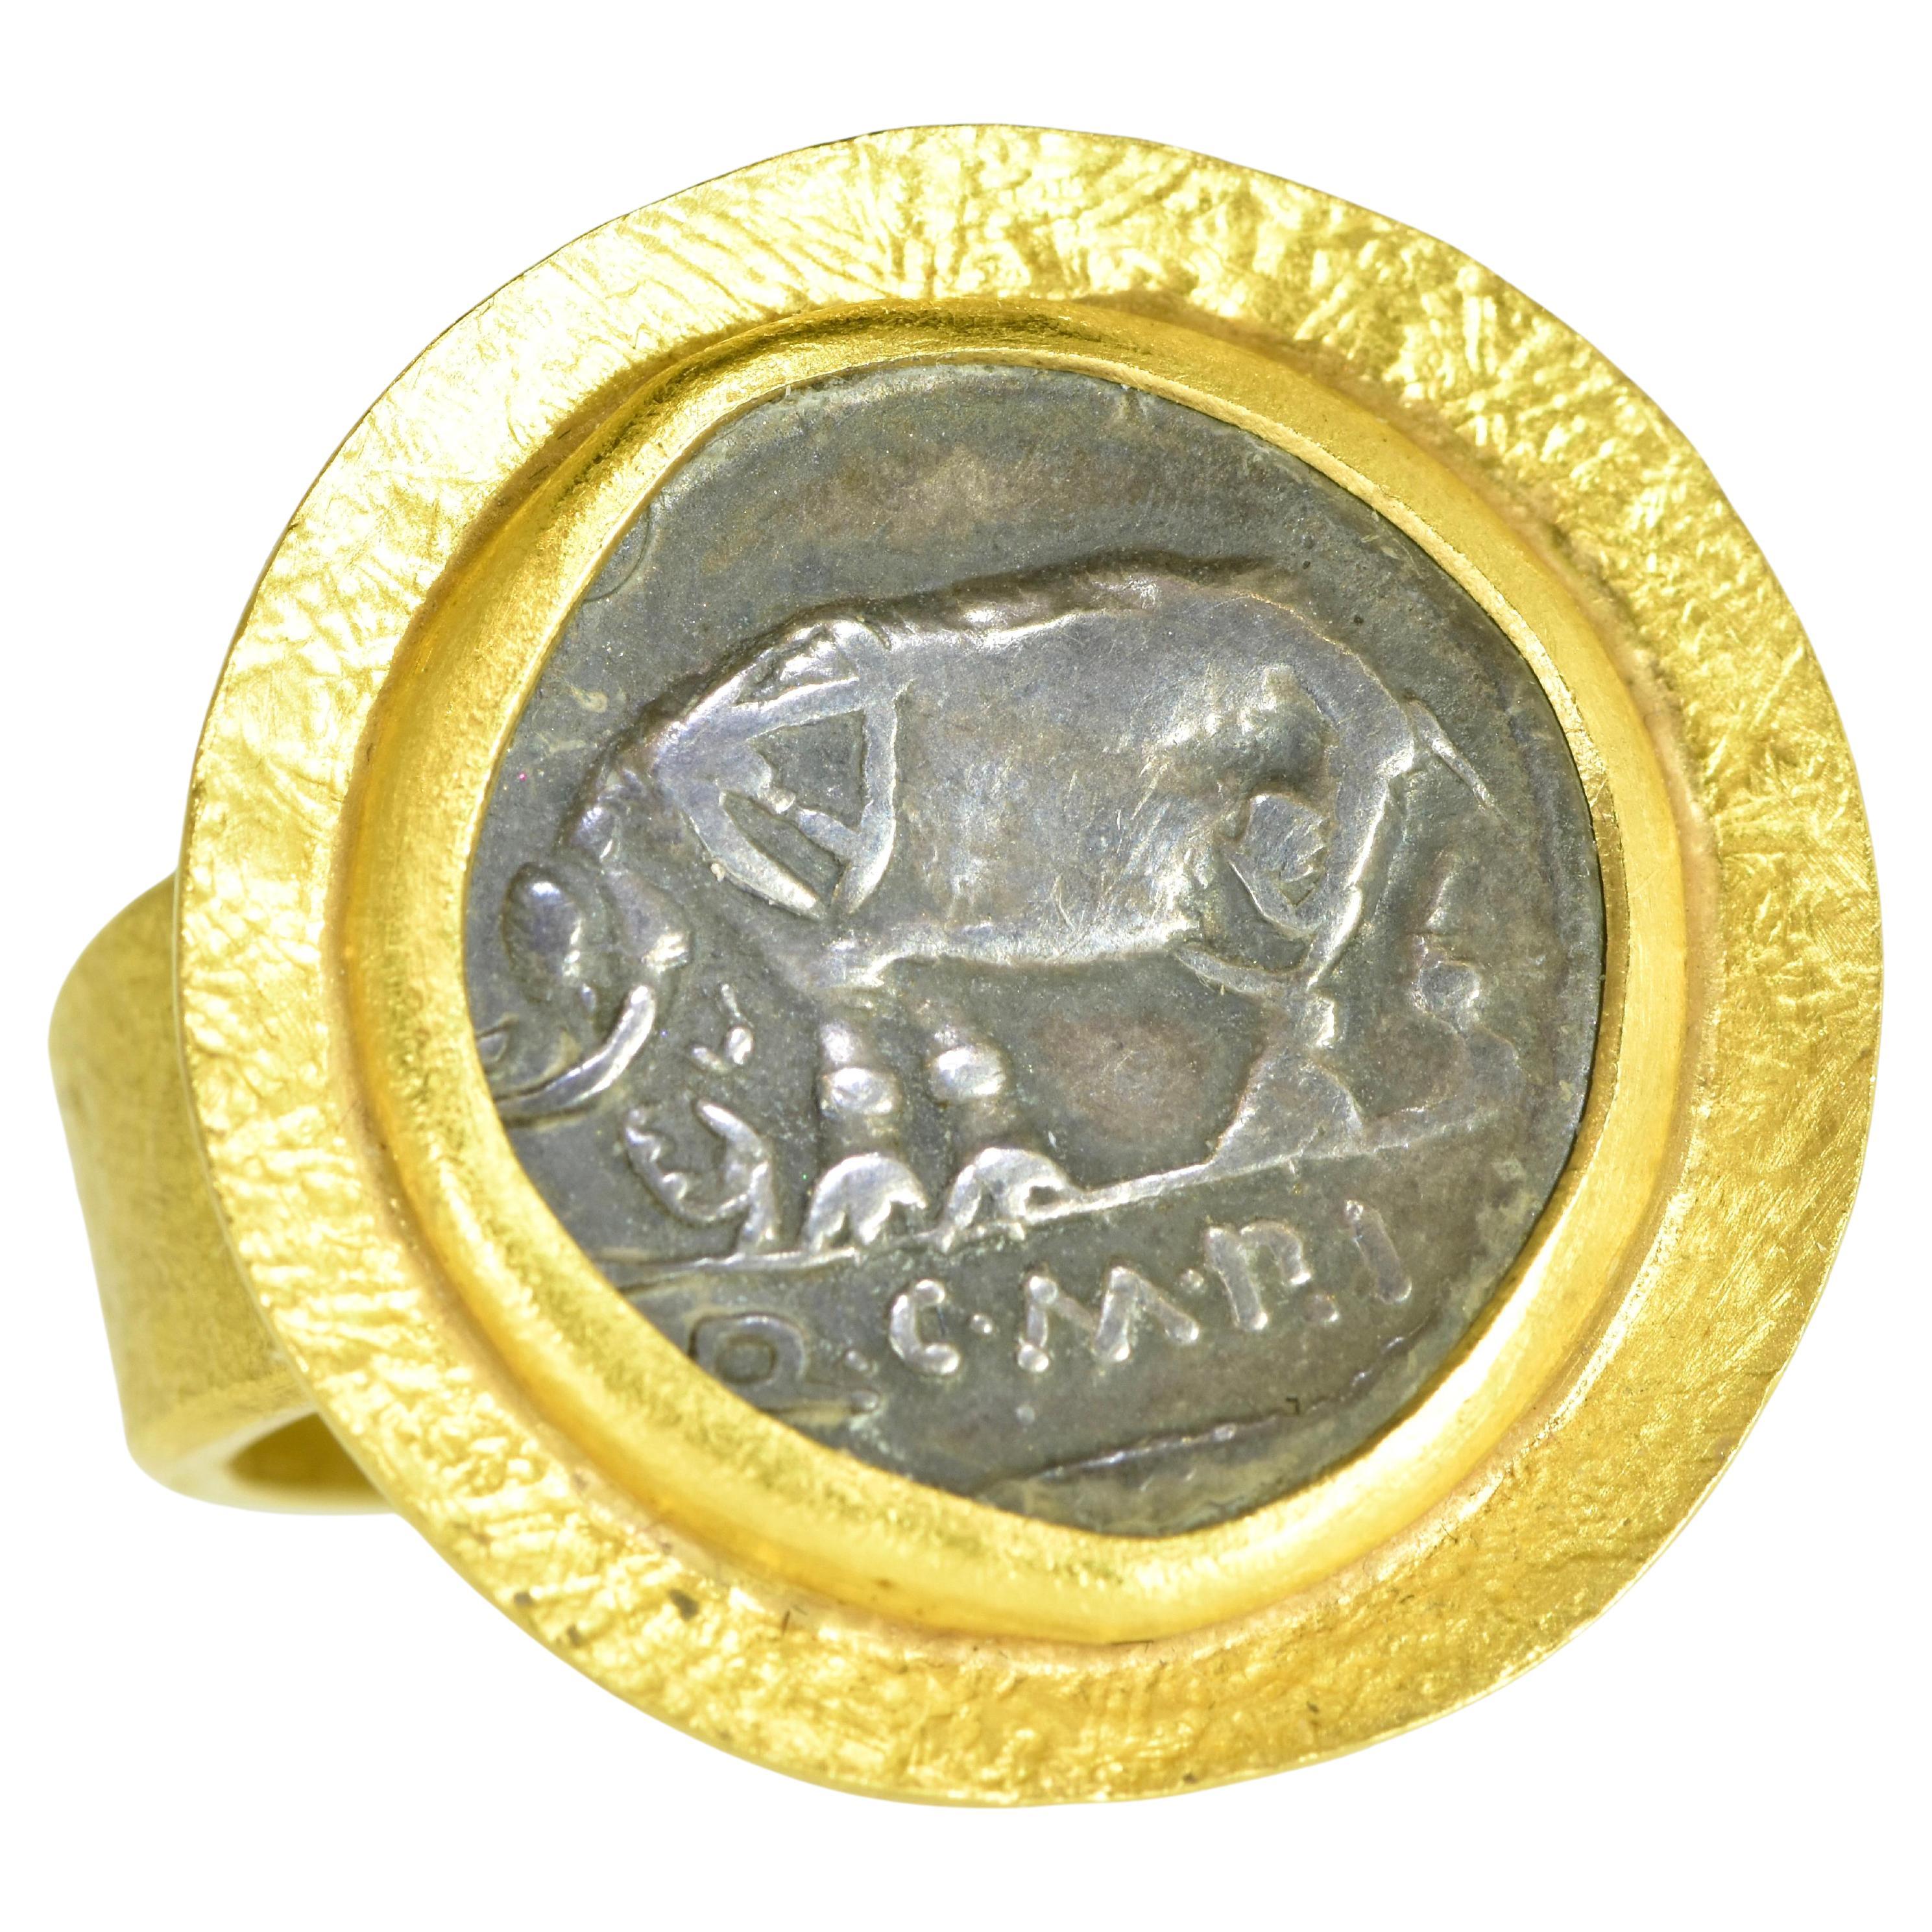 22K gold Ring centering a fine Ancient Roman Coin, Fairchild & Co.